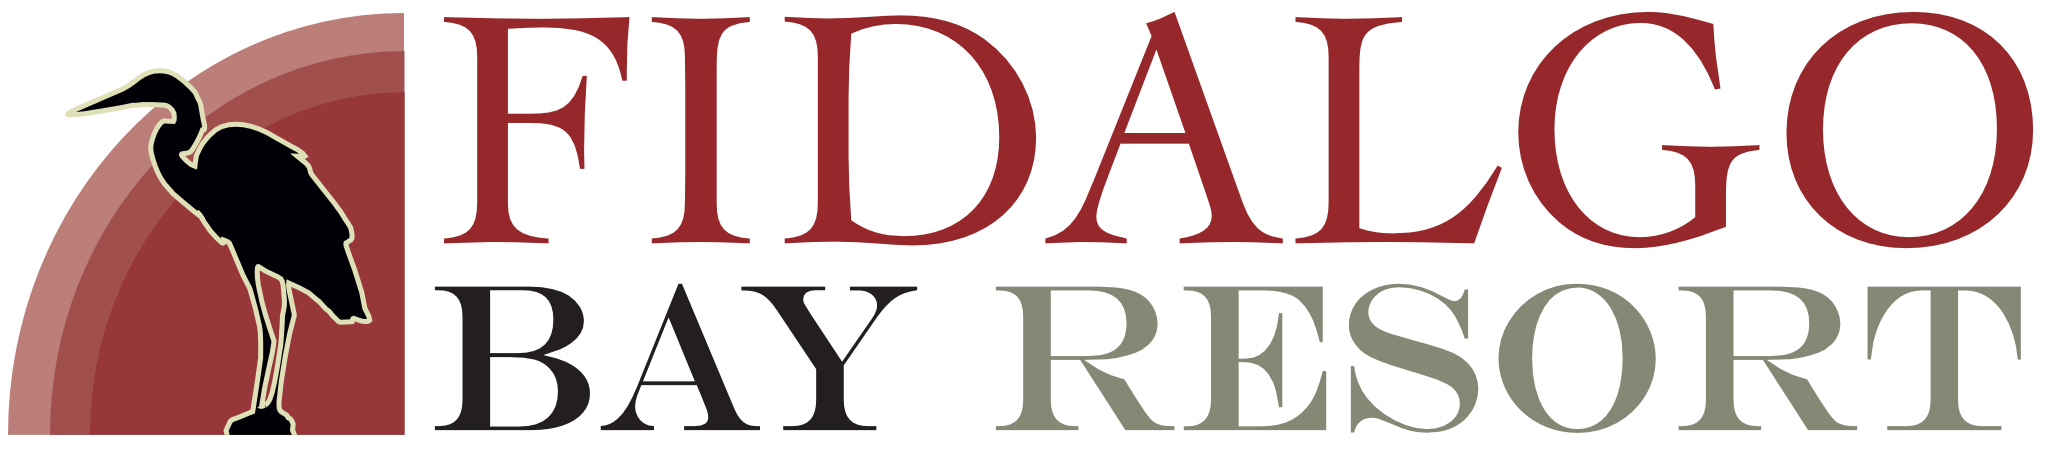 Fidalgo Bay Resort's Logo